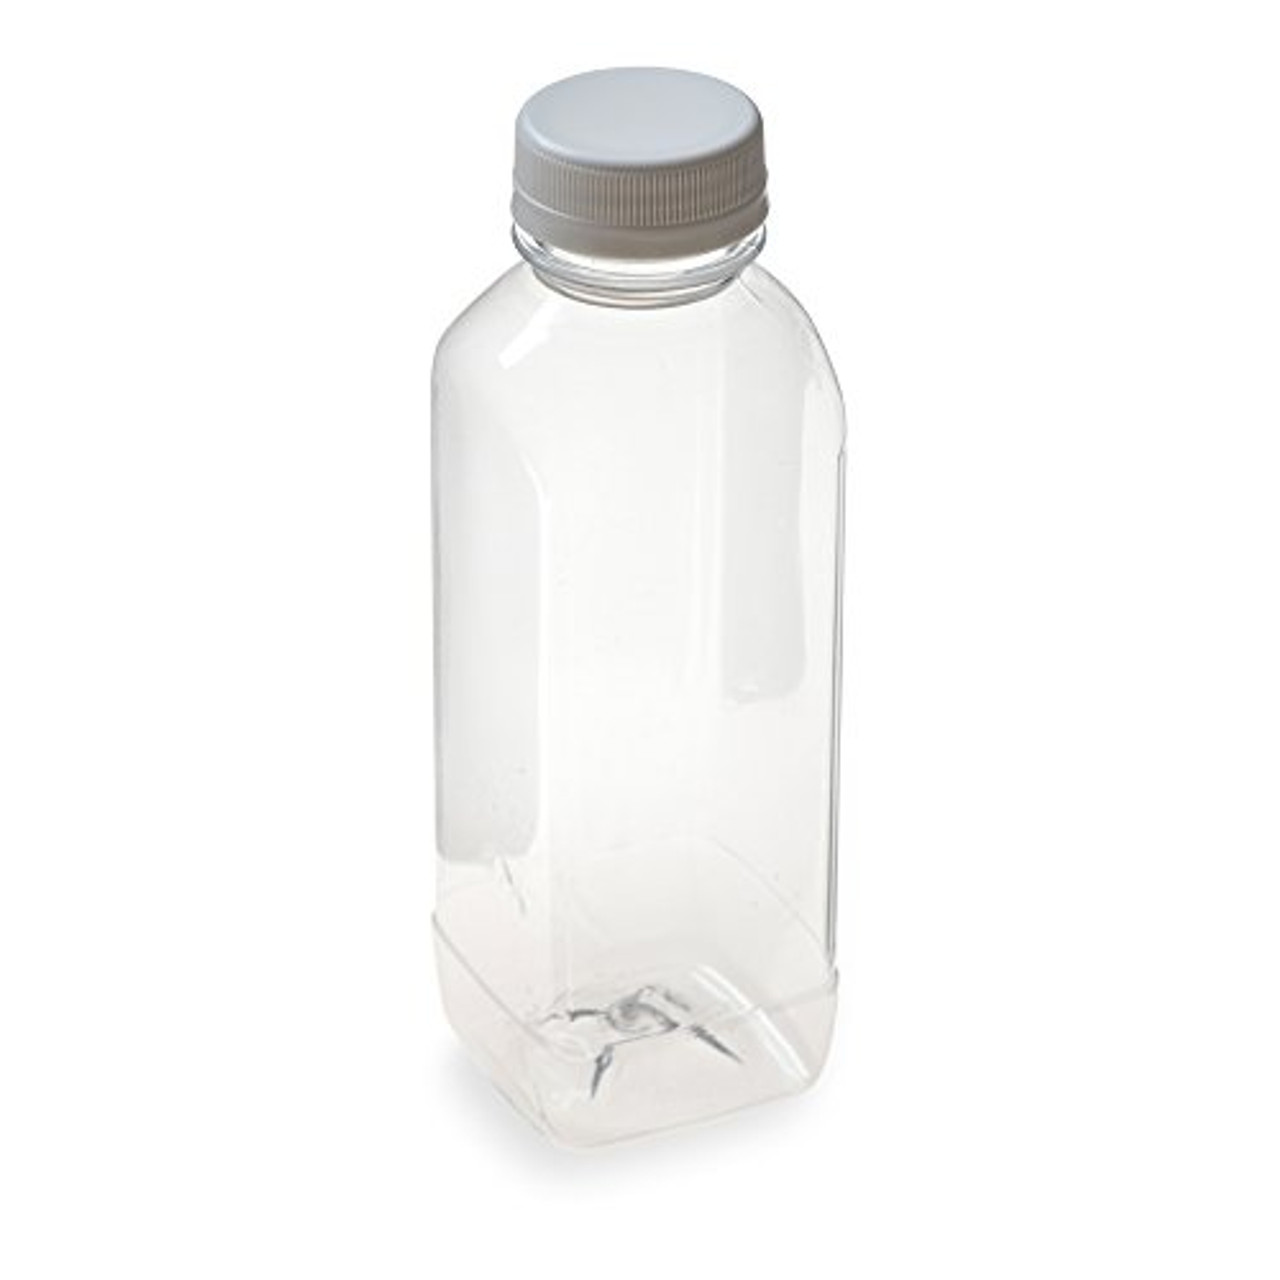 PET Plastic Juice Bottles, Glass Juice Bottles